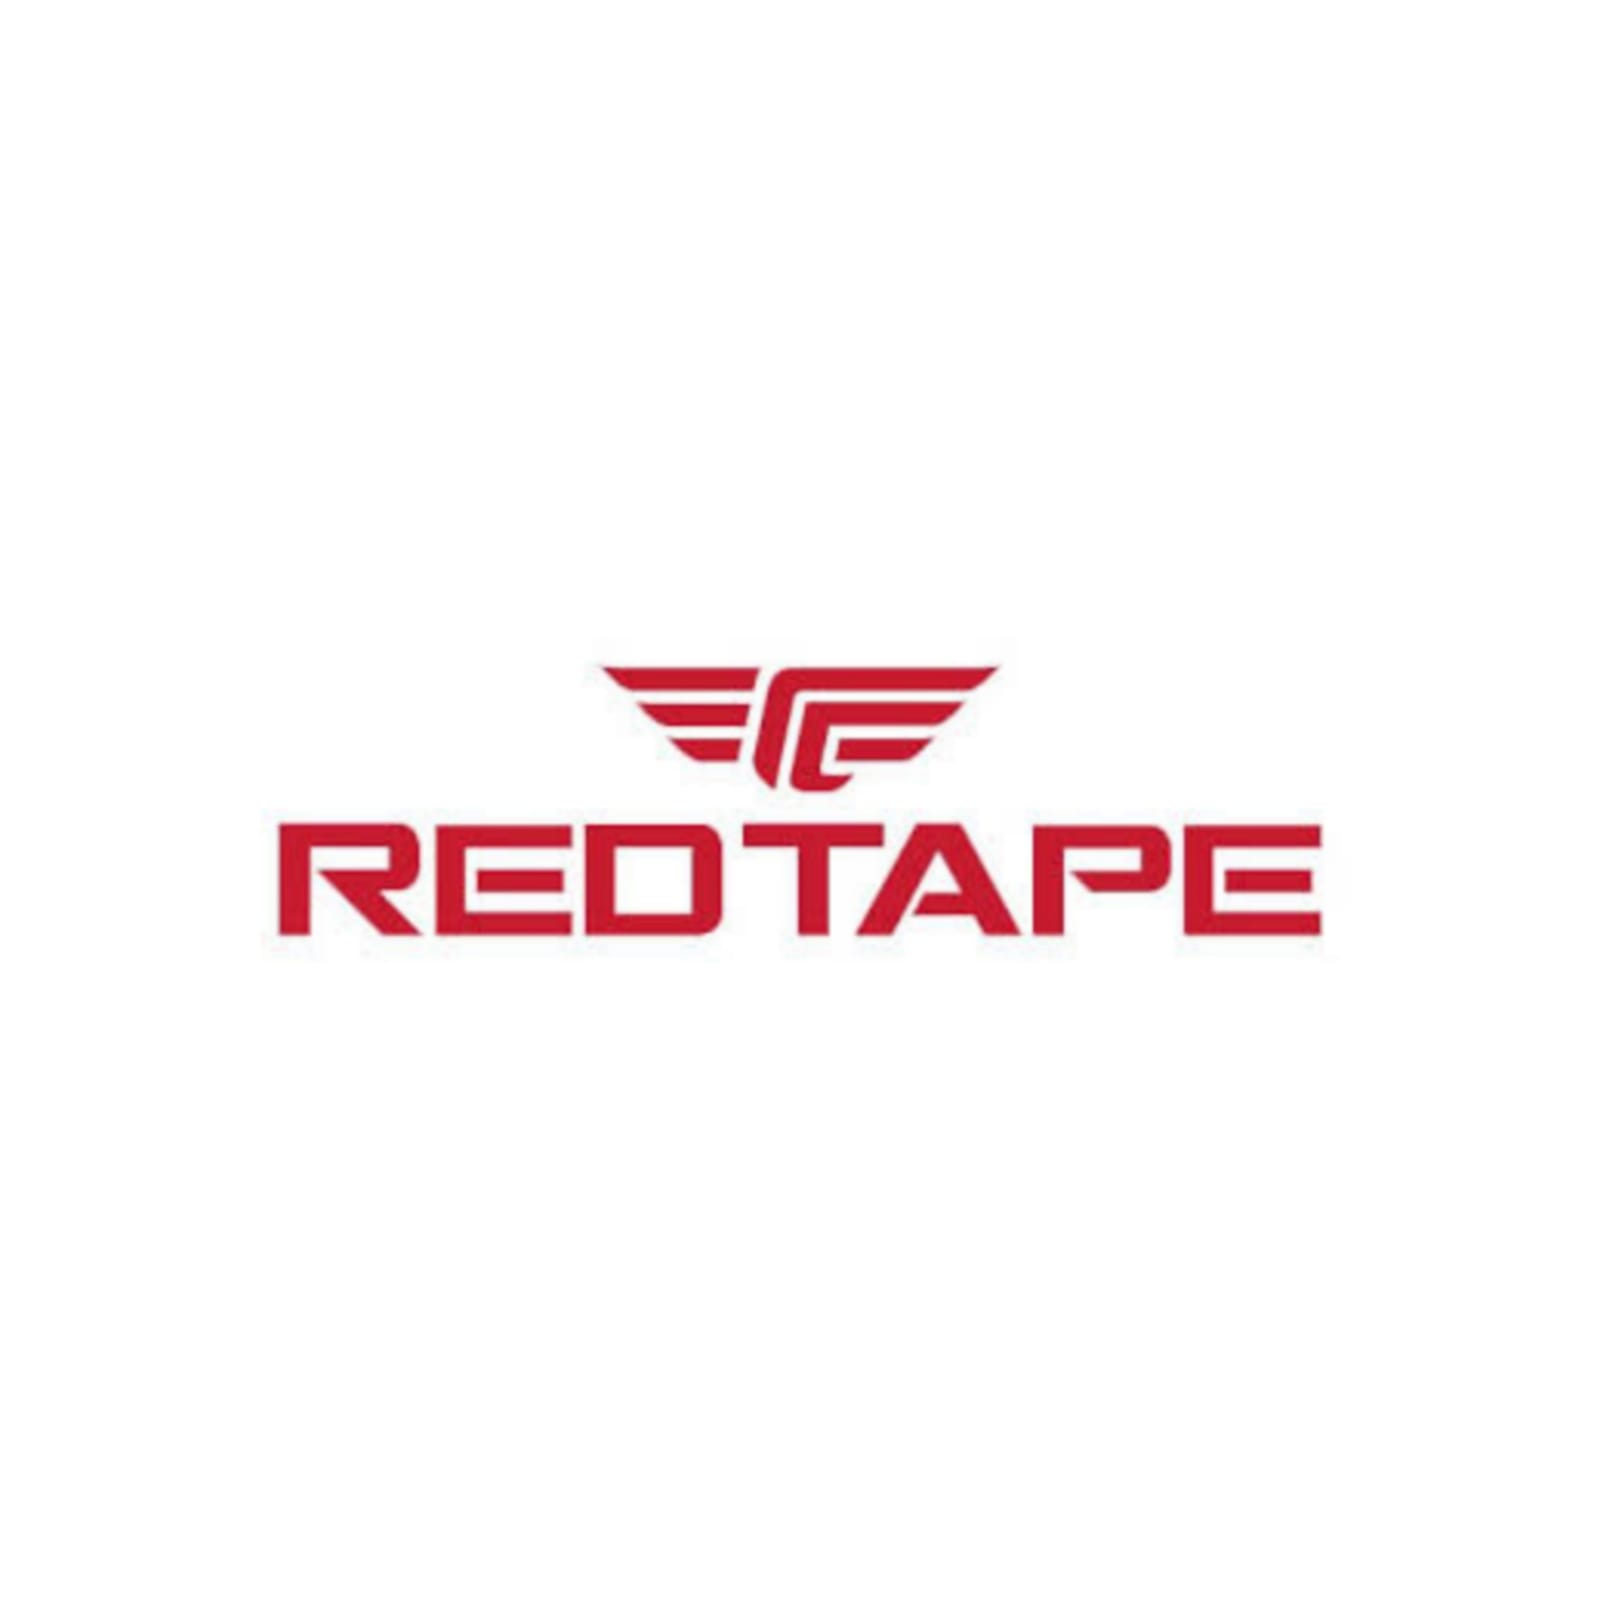 Conveyor Client RedTape